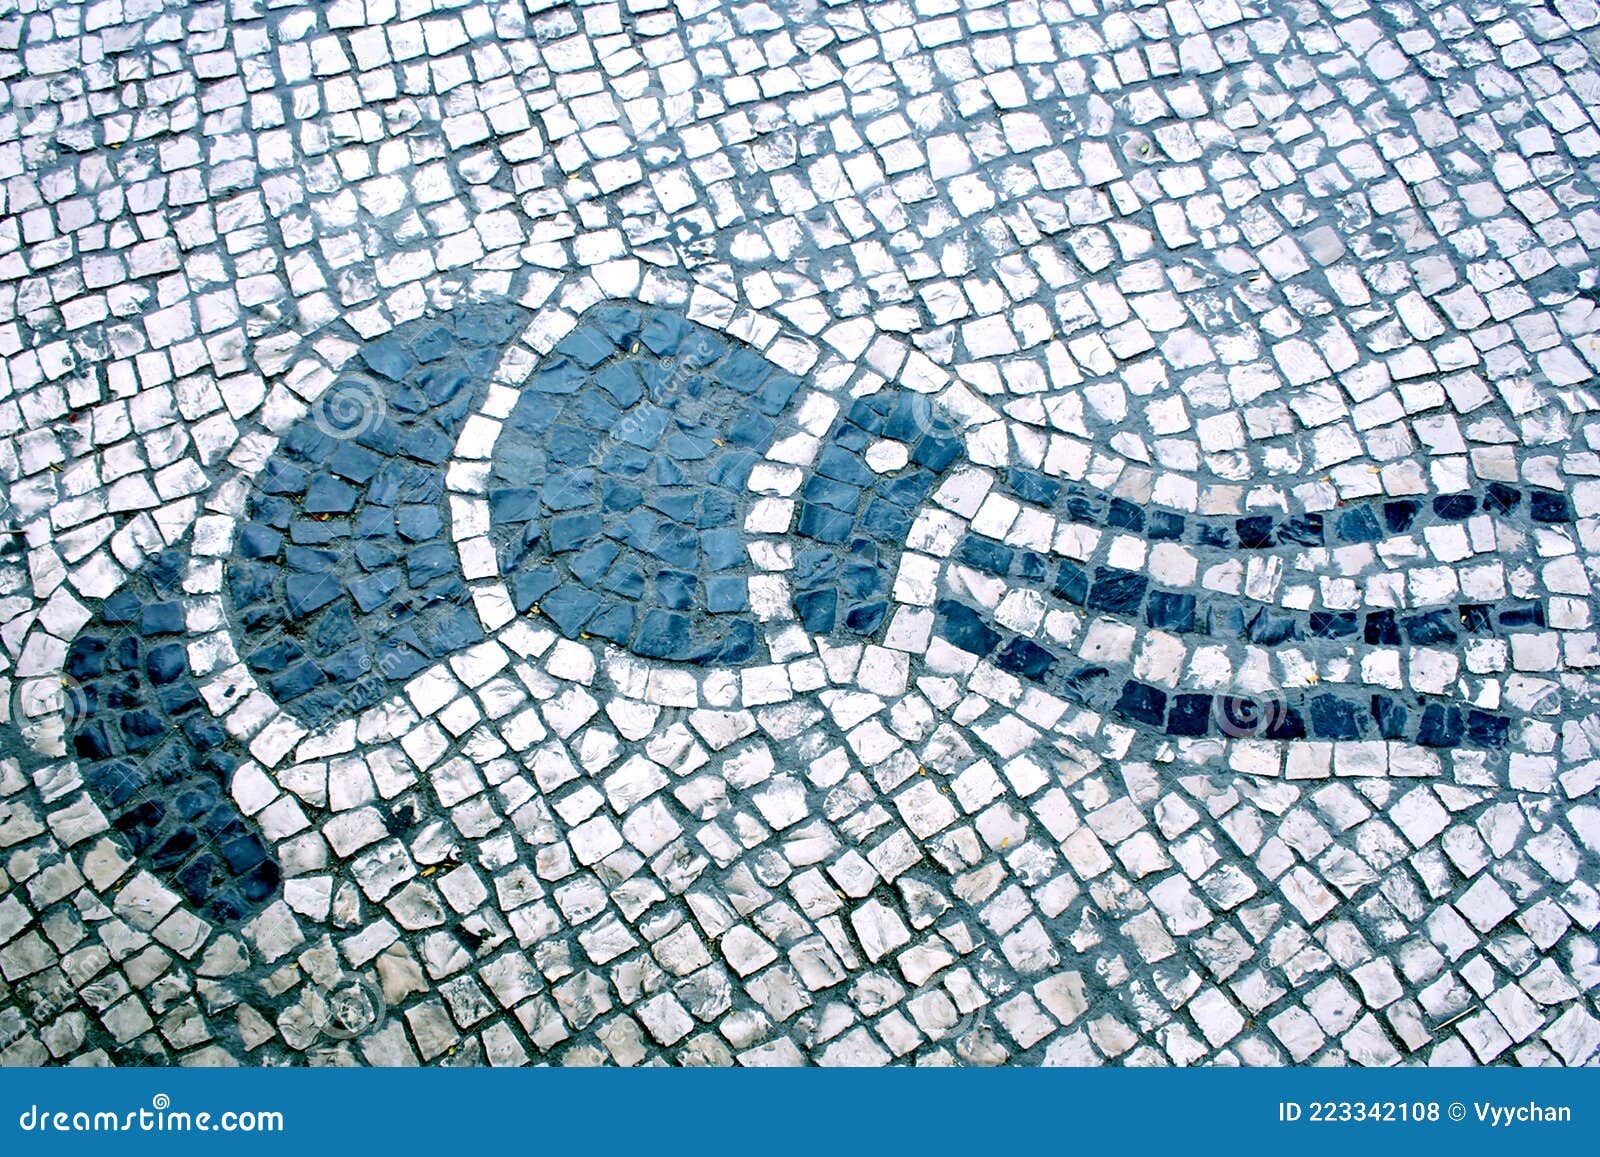 portuguese macau mosaic arts craftsmanship marine life squid macao mosaico cobblestone street cultural heritage architecture